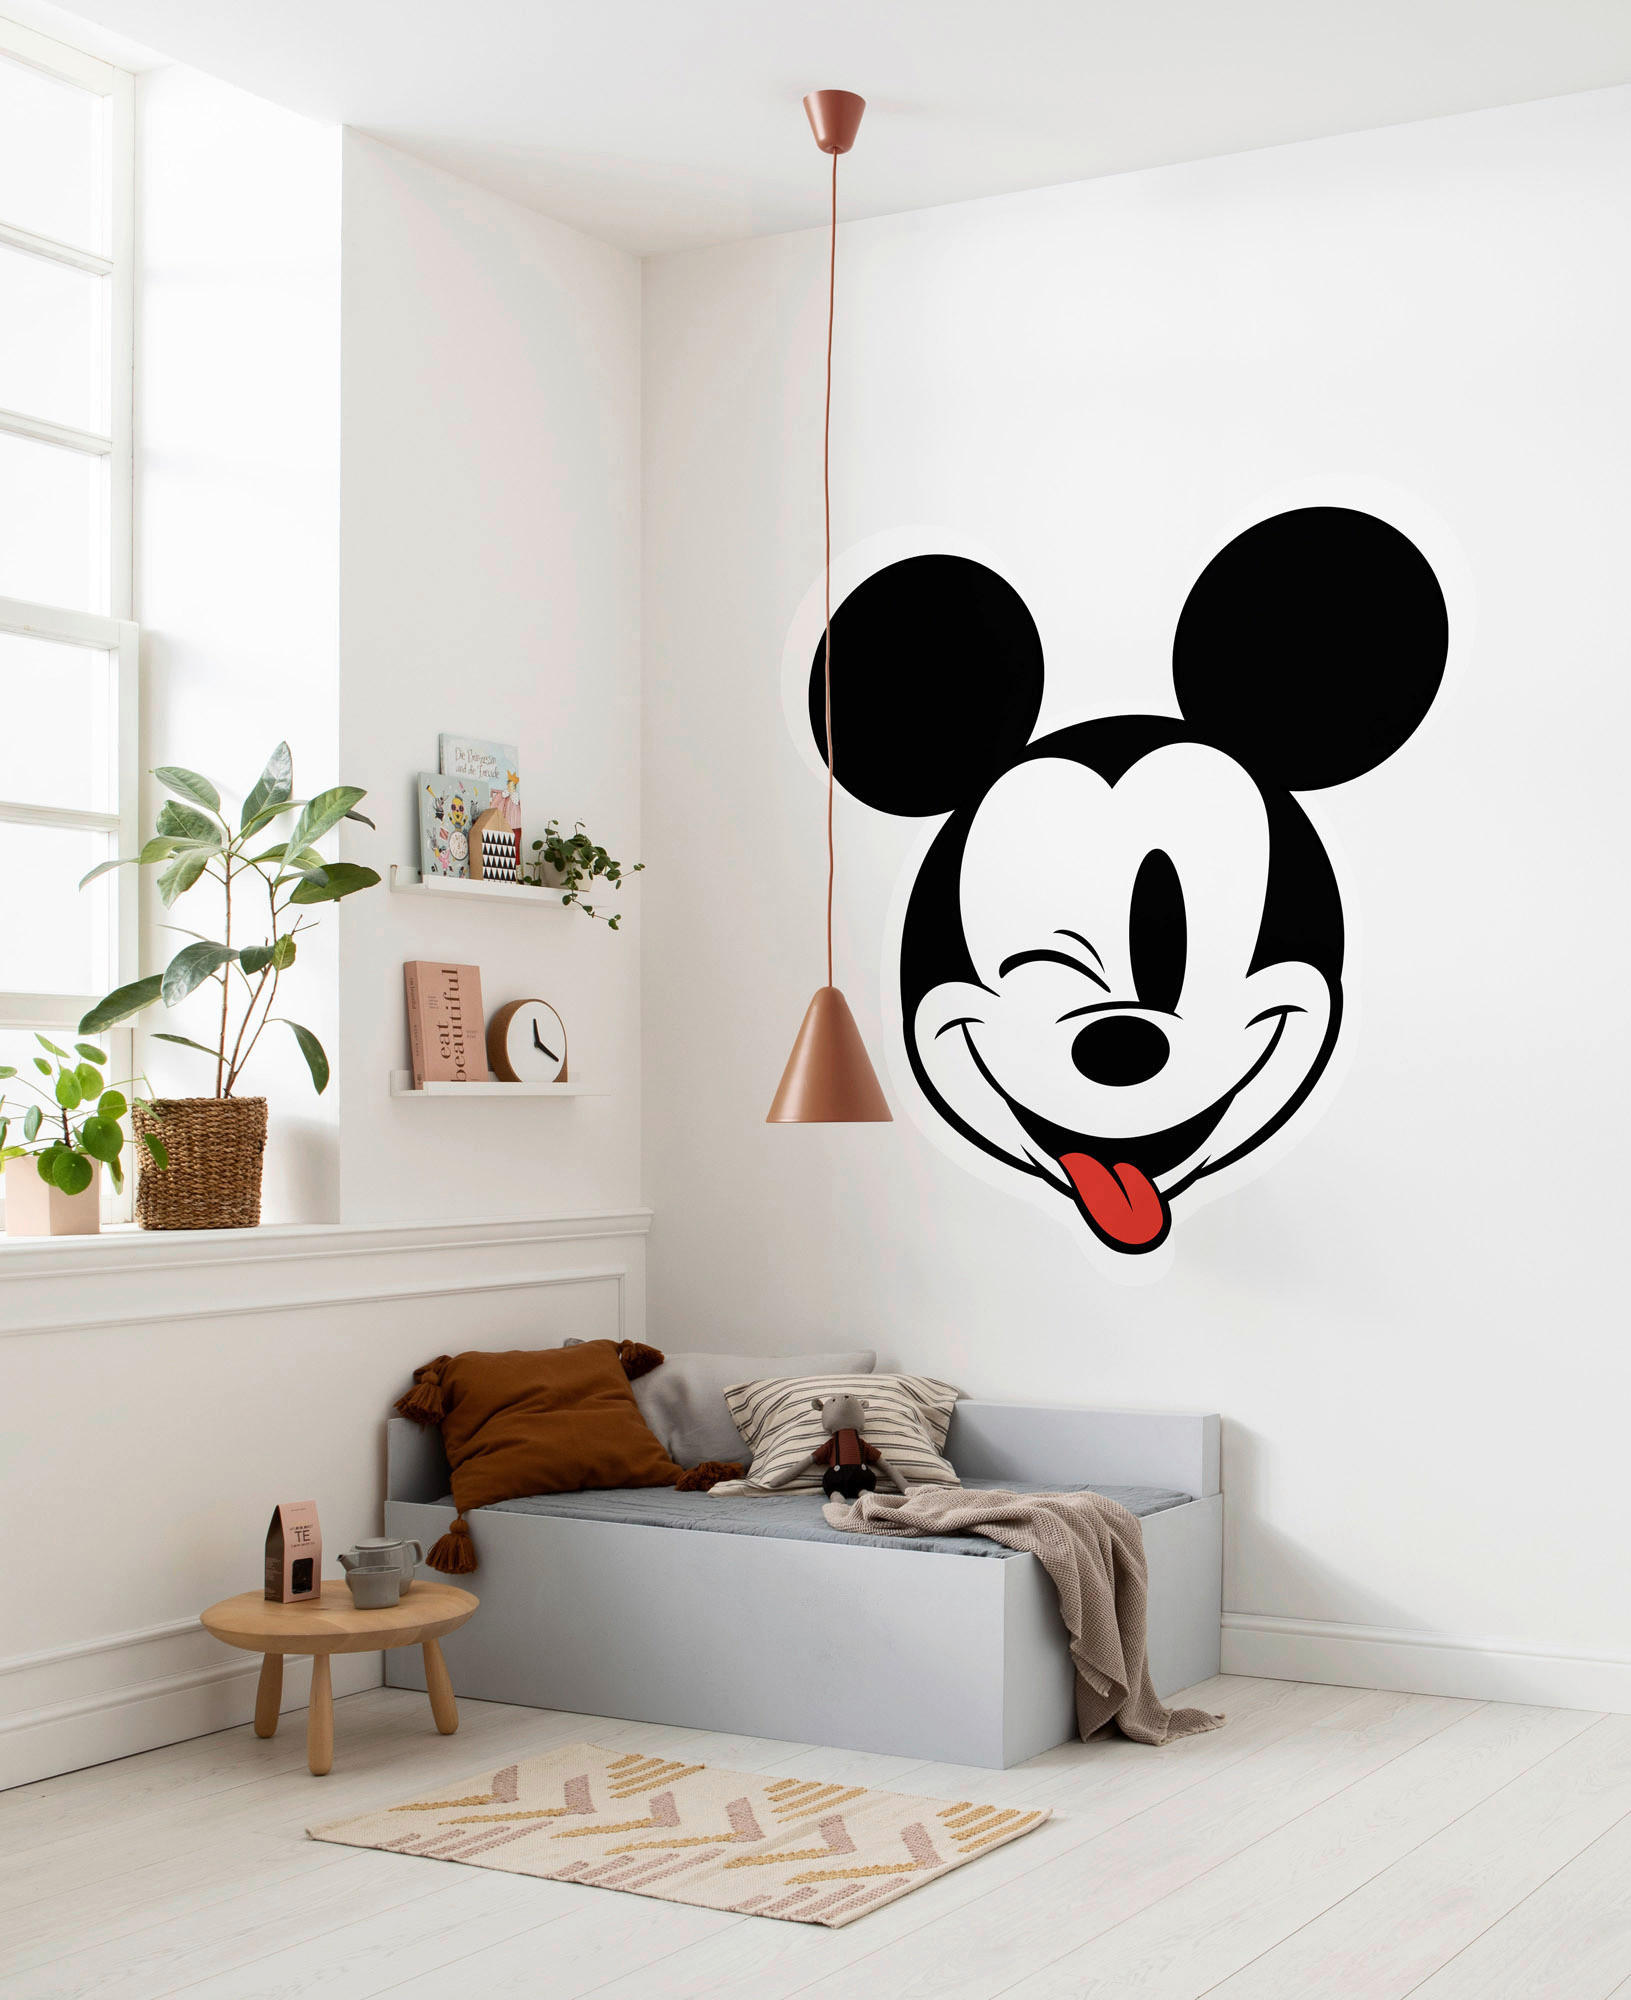 Vliestapete (selbstklebend) Mickey-Mouse-Design | Fototapeten